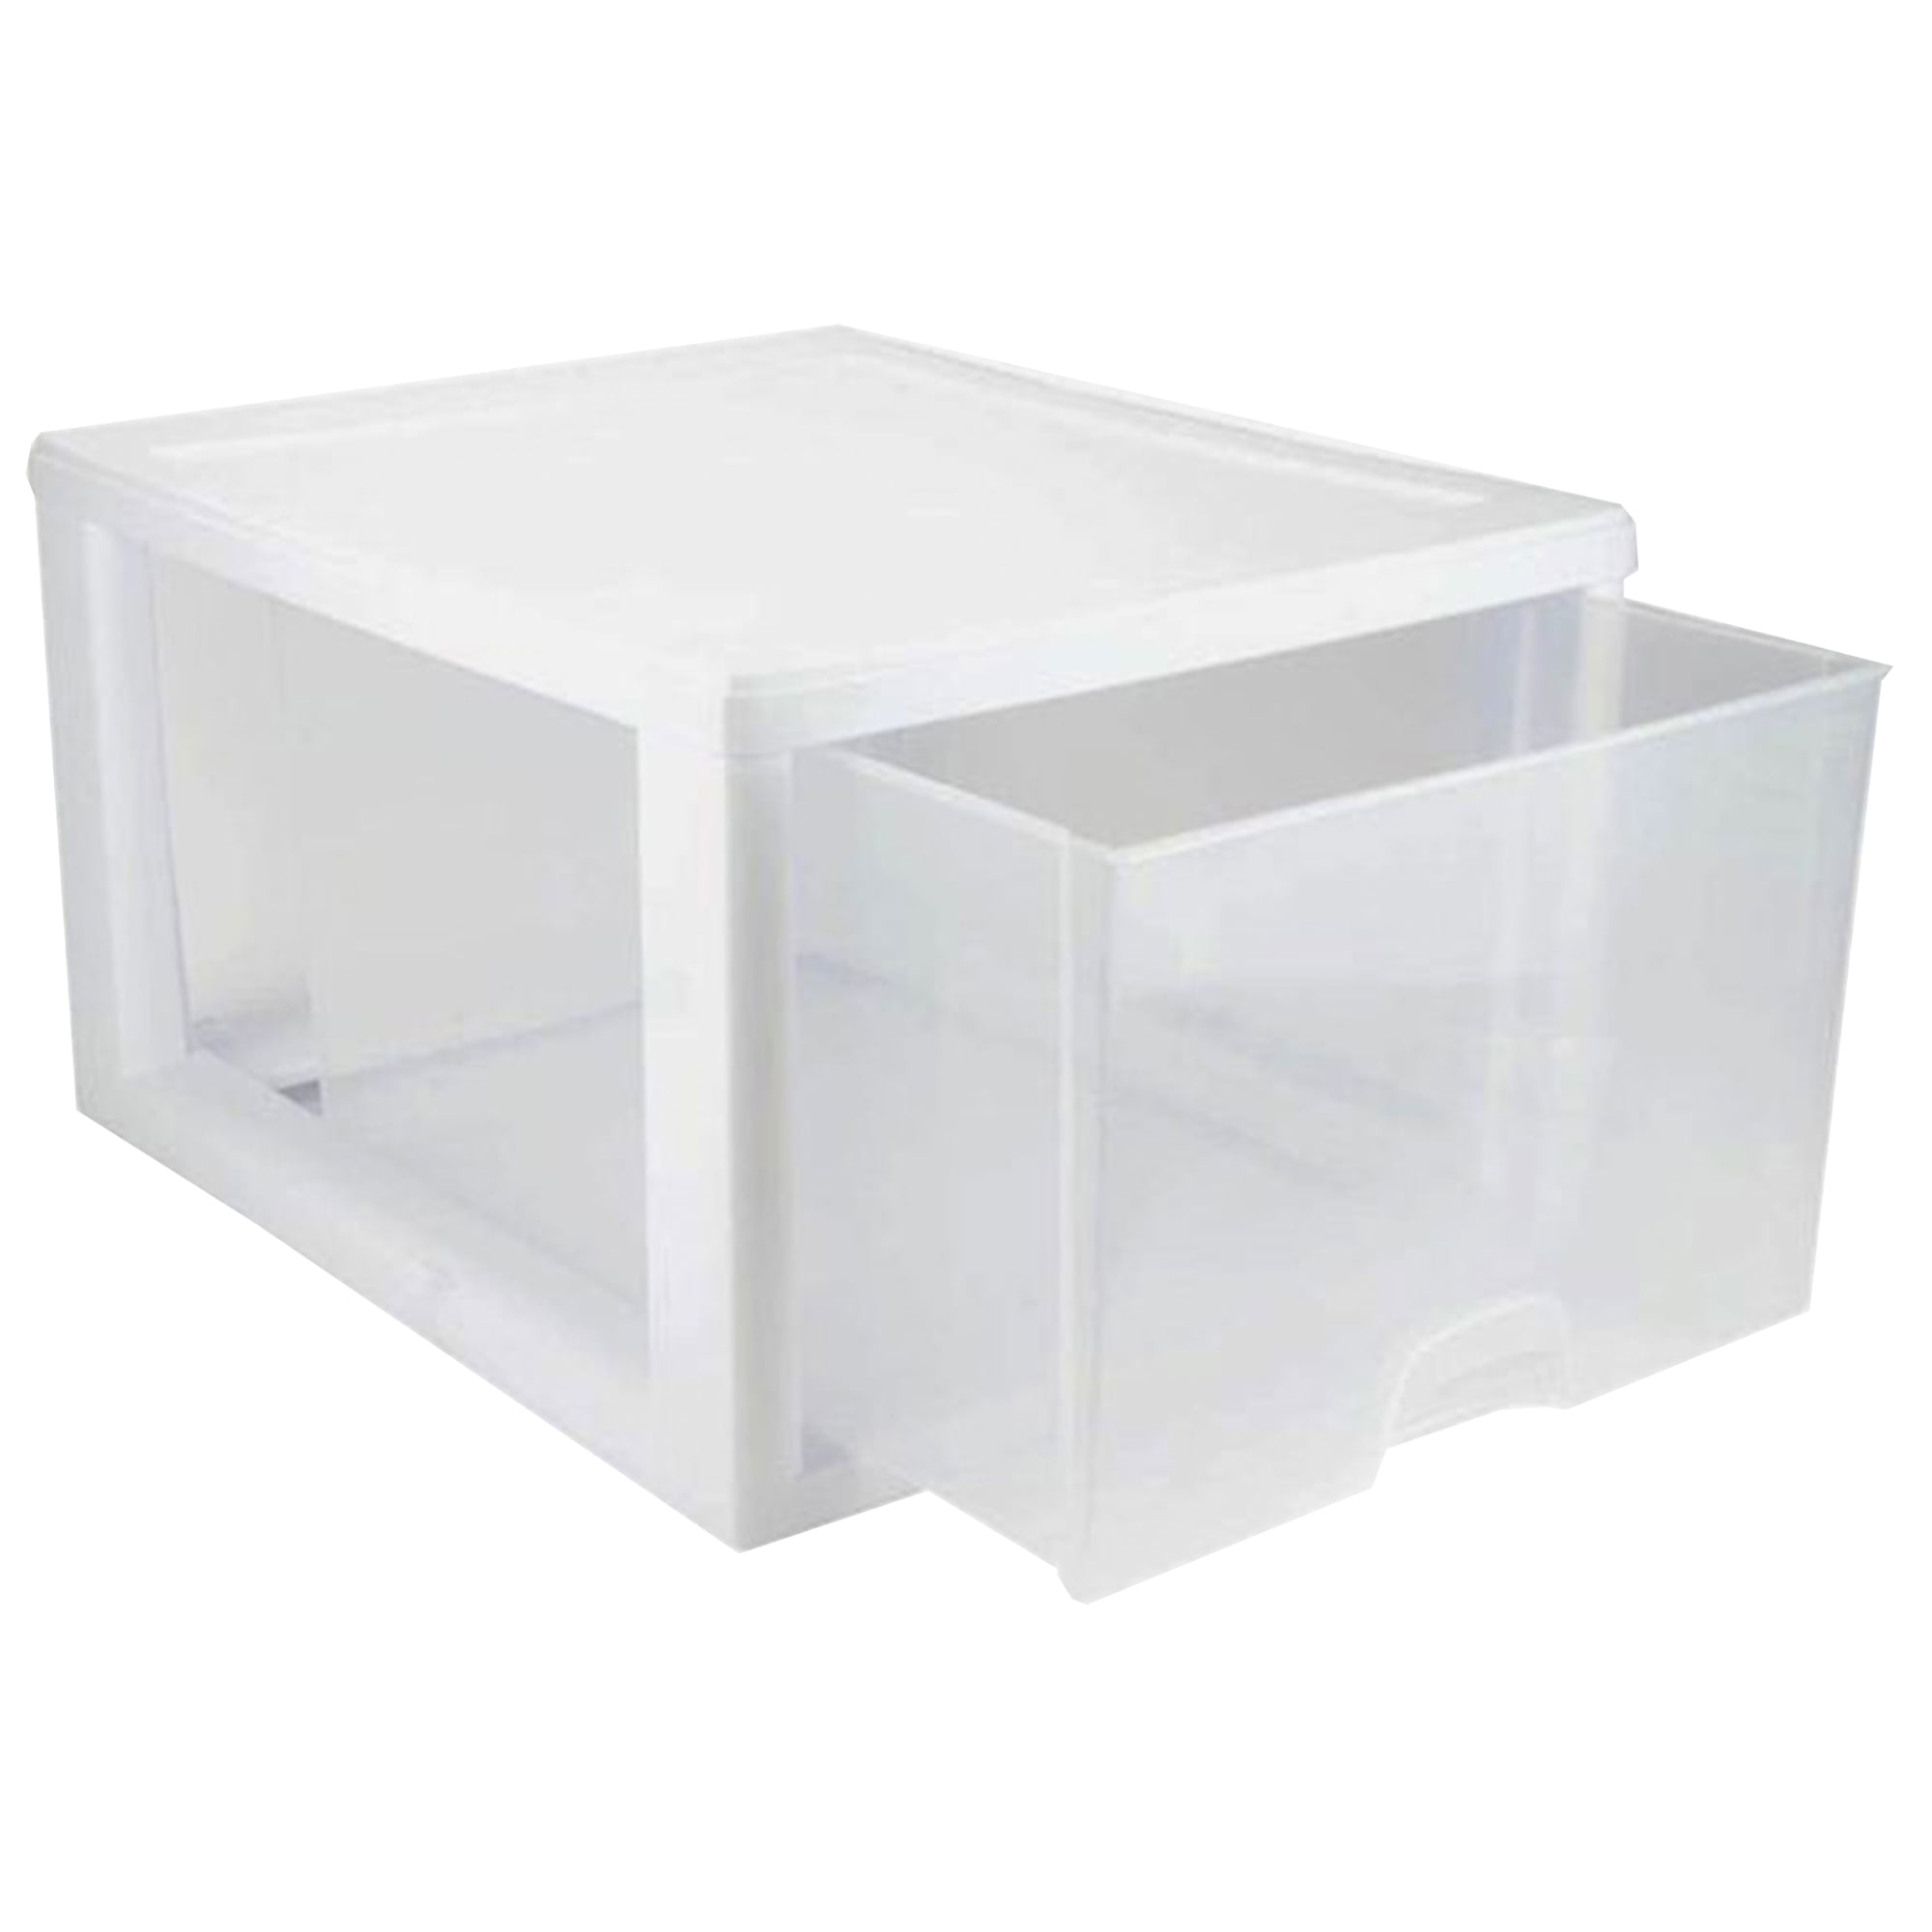 Sterilite 27 Qt. Clear & White Plastic Storage Bin with One Drawer (4 Pack)